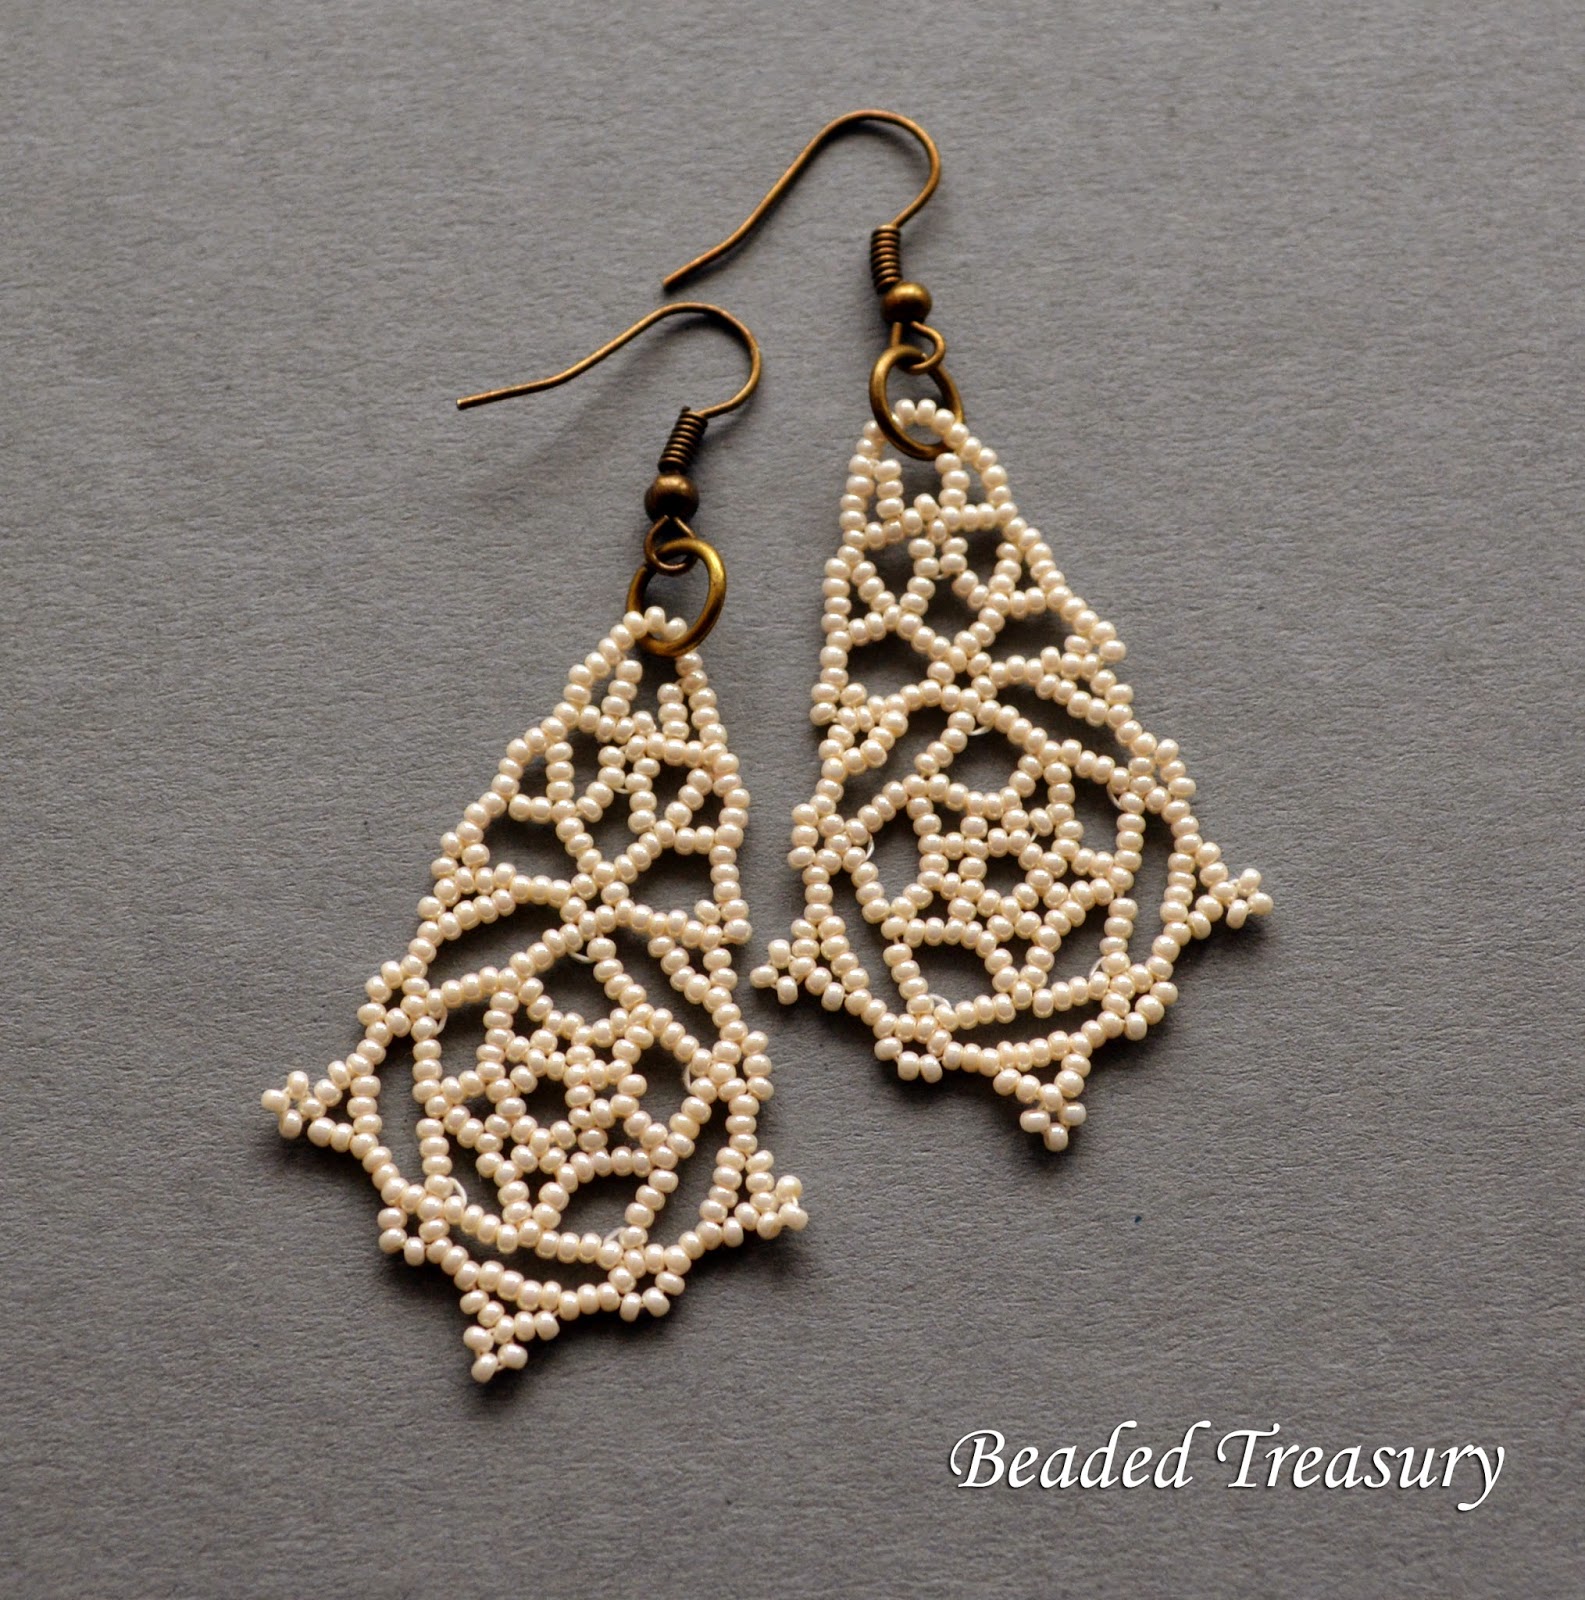 Beaded Treasury: Pearly Lace - beadwoven earrings tutorial